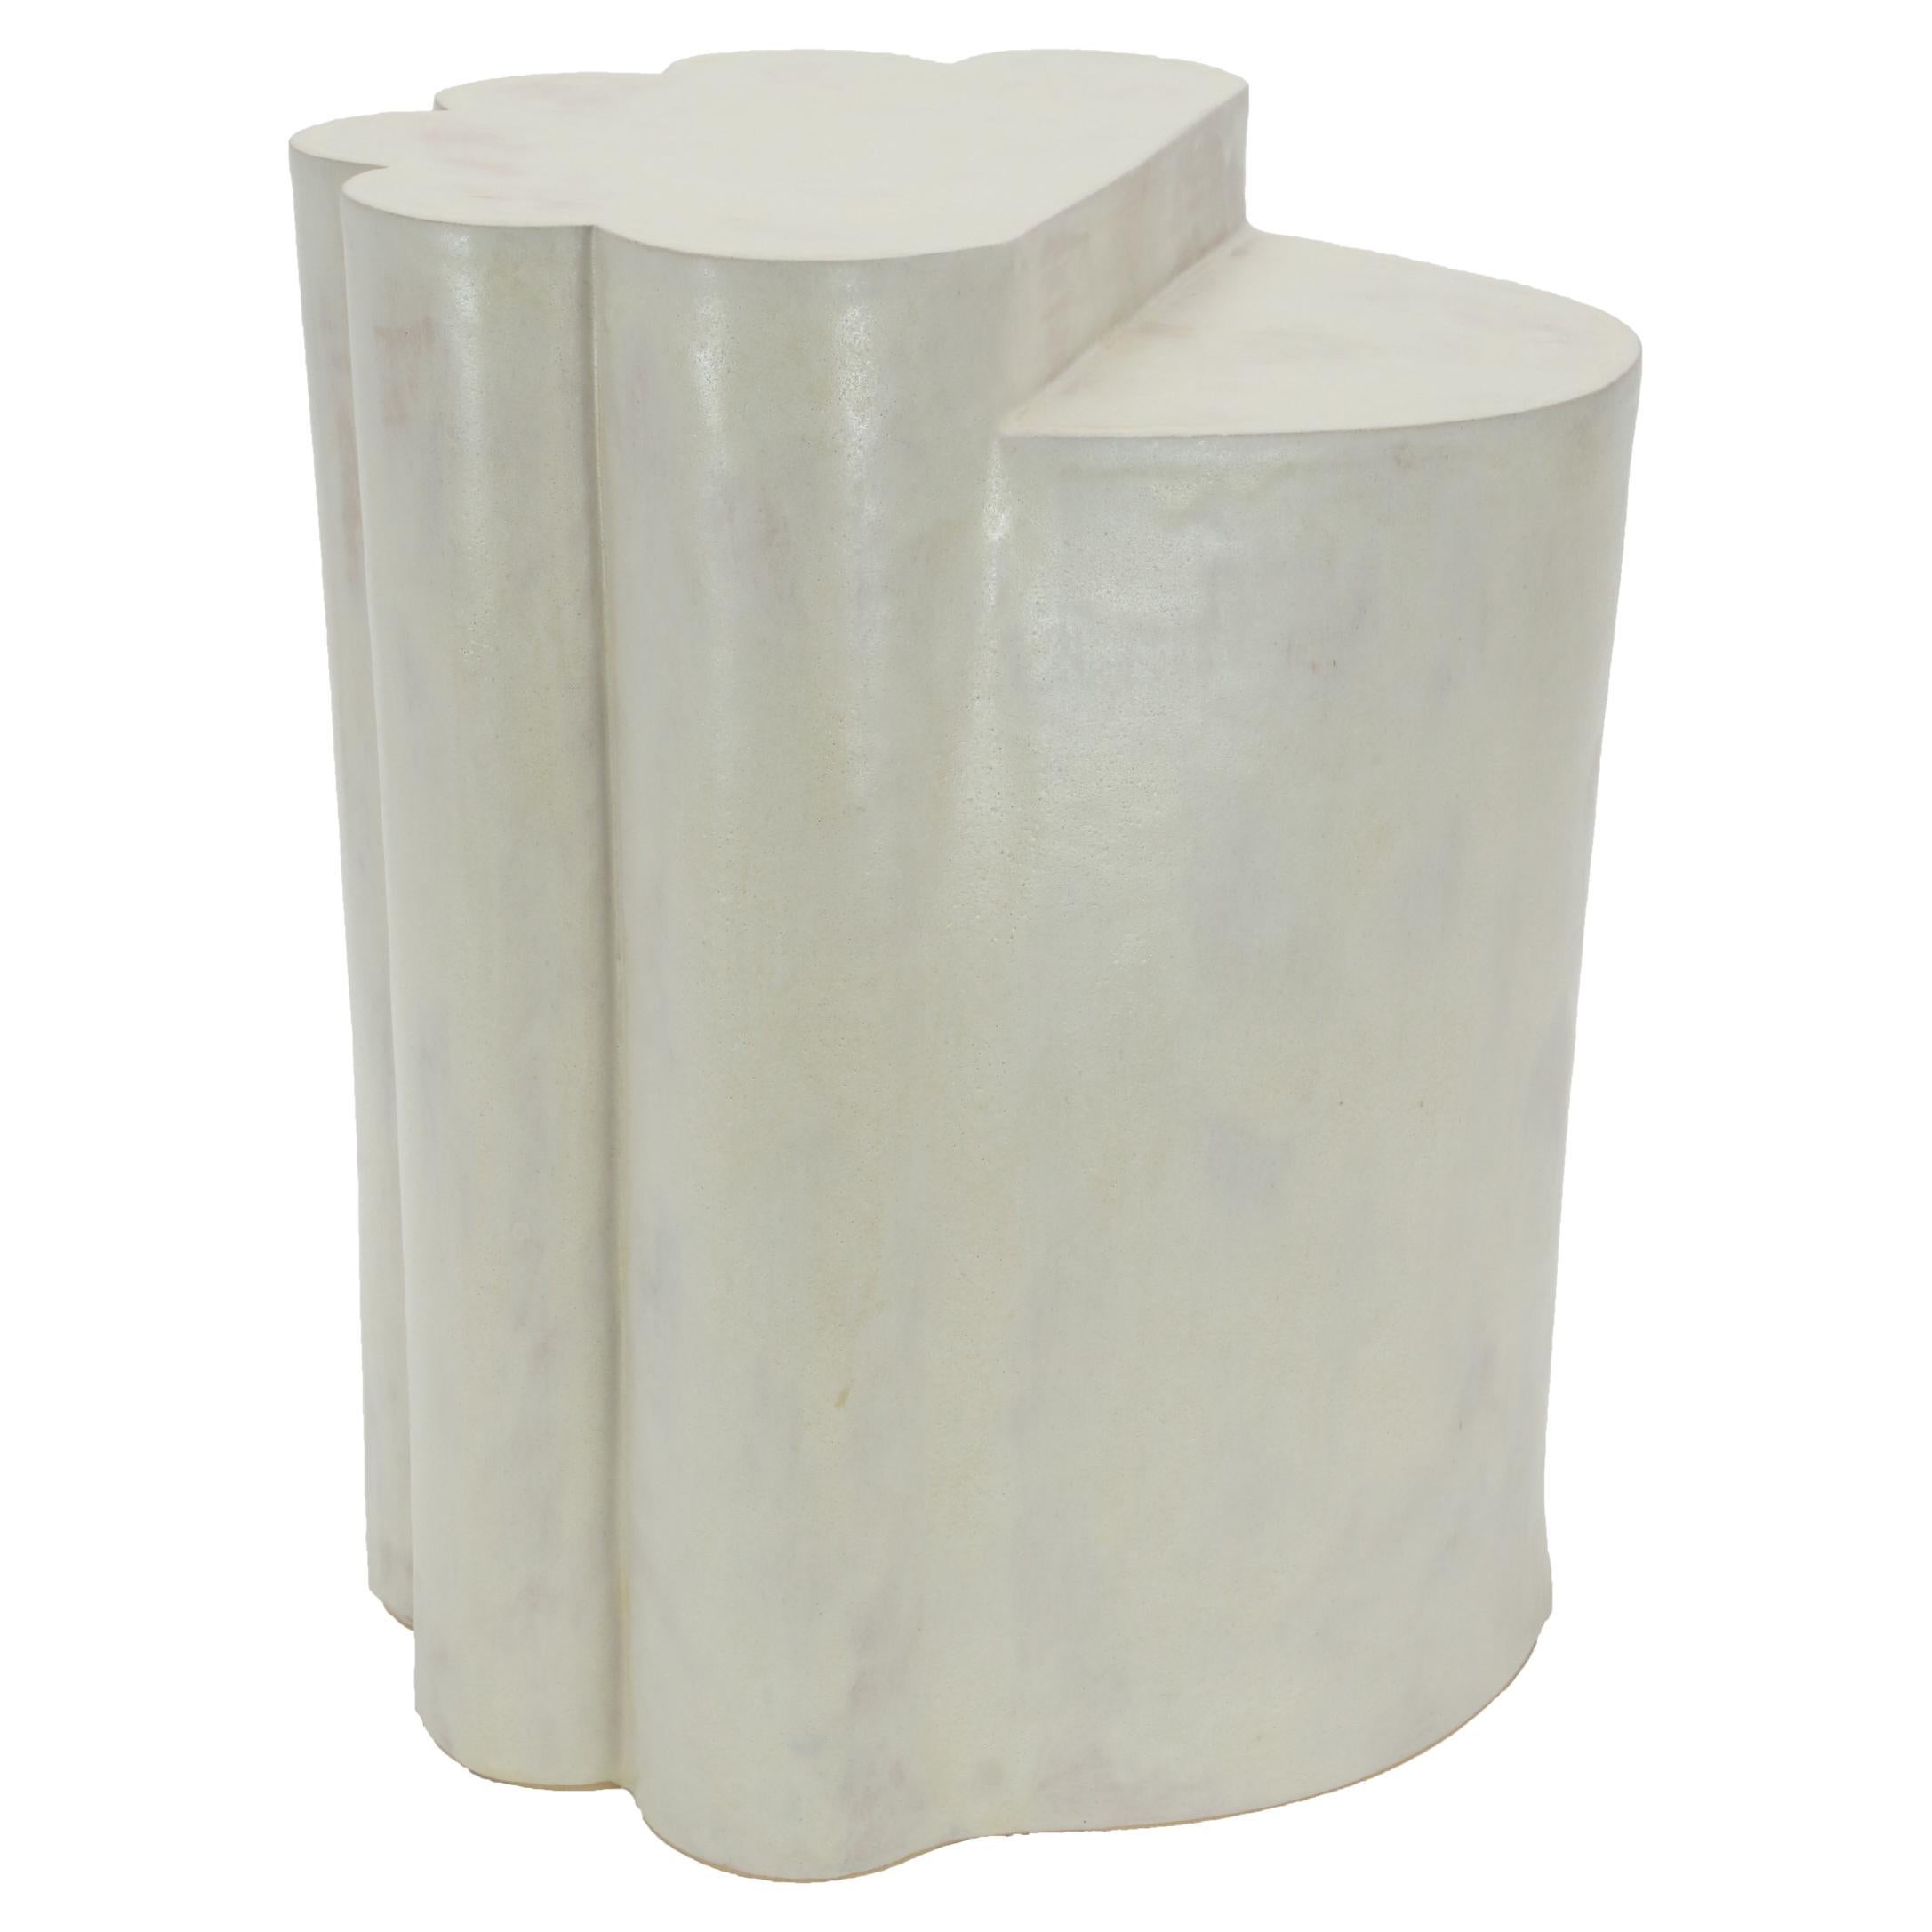 Ceramic Ledge Side Table & Stool in Cream by BZIPPY For Sale